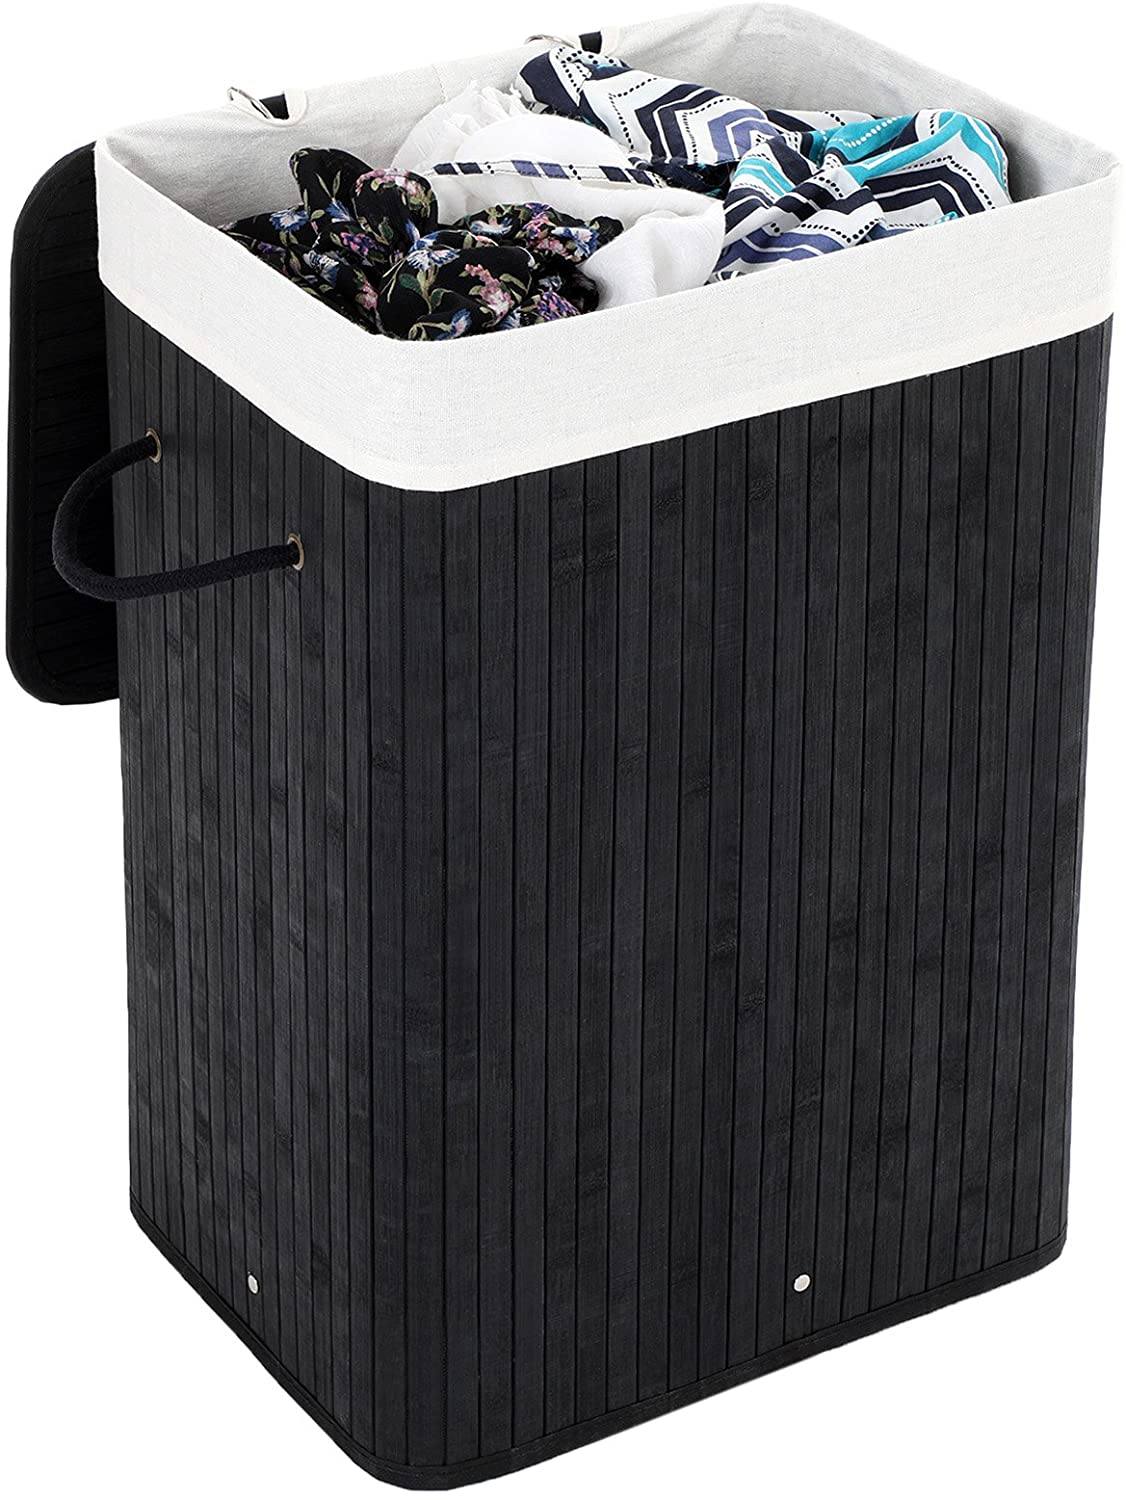 XL 72 L Large Bamboo Foldable Laundry Basket Storage Hamper Box with Removable Washable Lining Black 40 x 30 x 60 cm LCB10B RAW58.dk